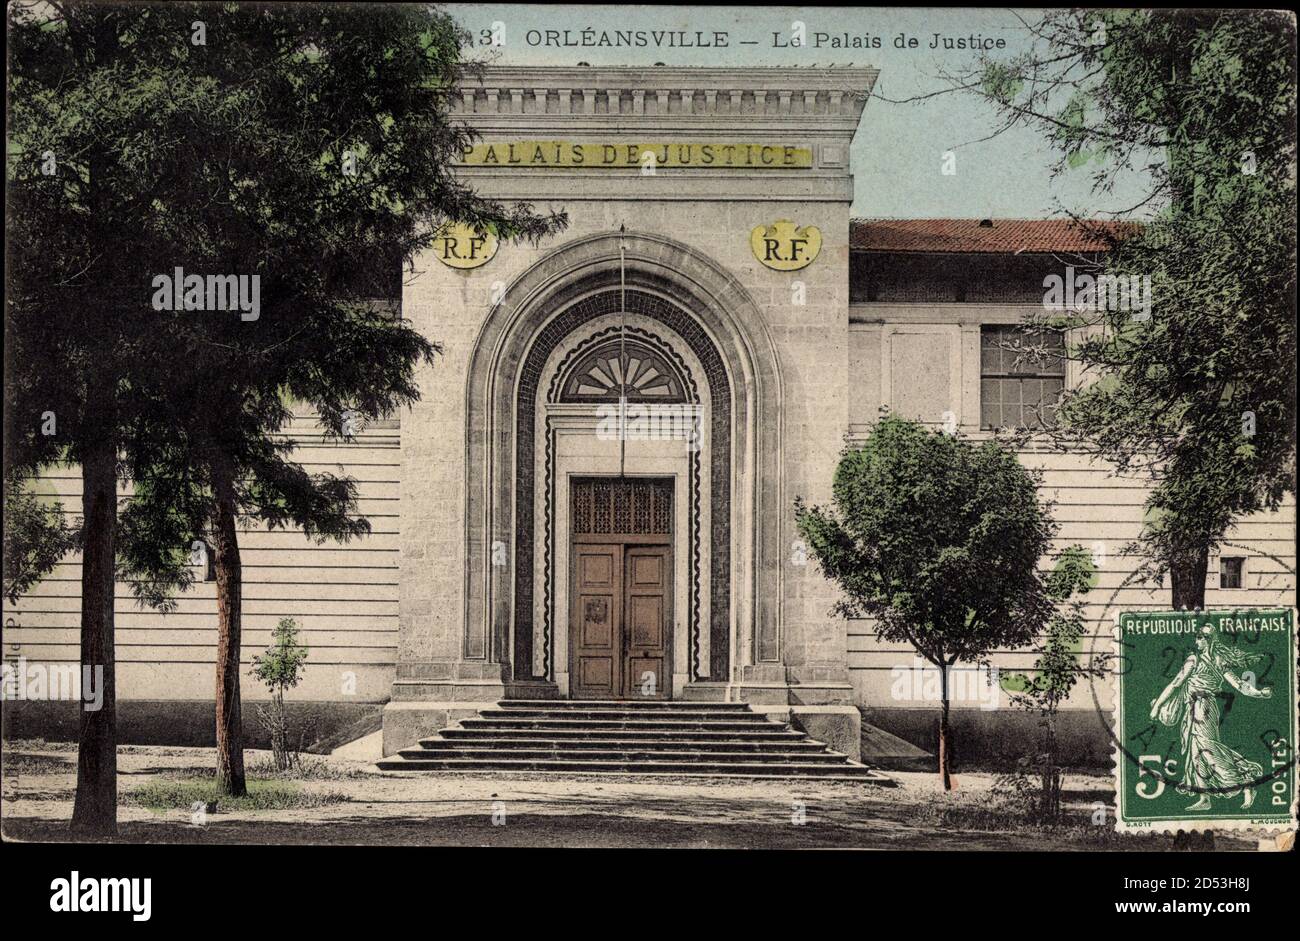 Orleansville Algerien, le Palais de Justice, Fassade, Eingang, Treppe | utilizzo in tutto il mondo Foto Stock